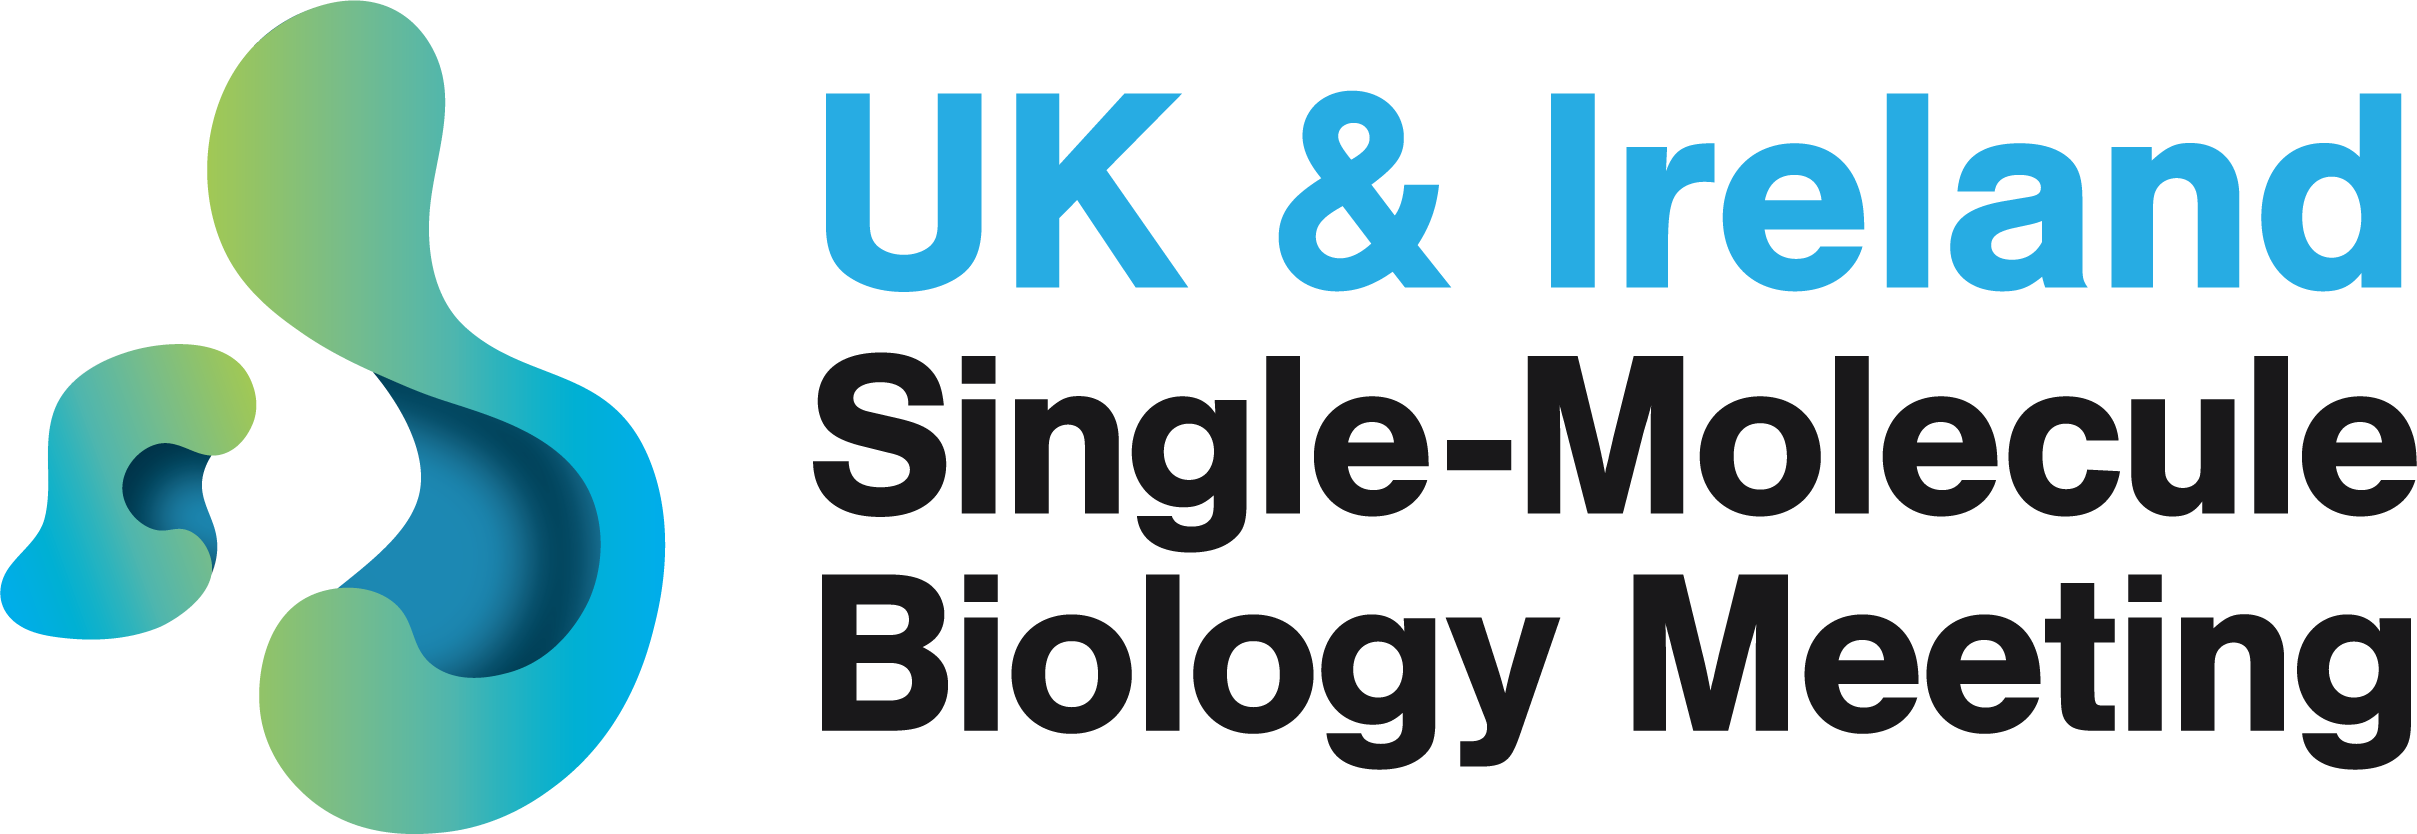 Uk & Ireland Single-Molecule Biology Meeting